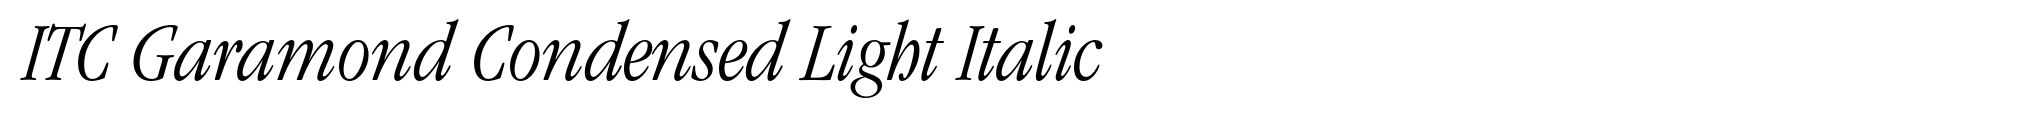 ITC Garamond Condensed Light Italic image